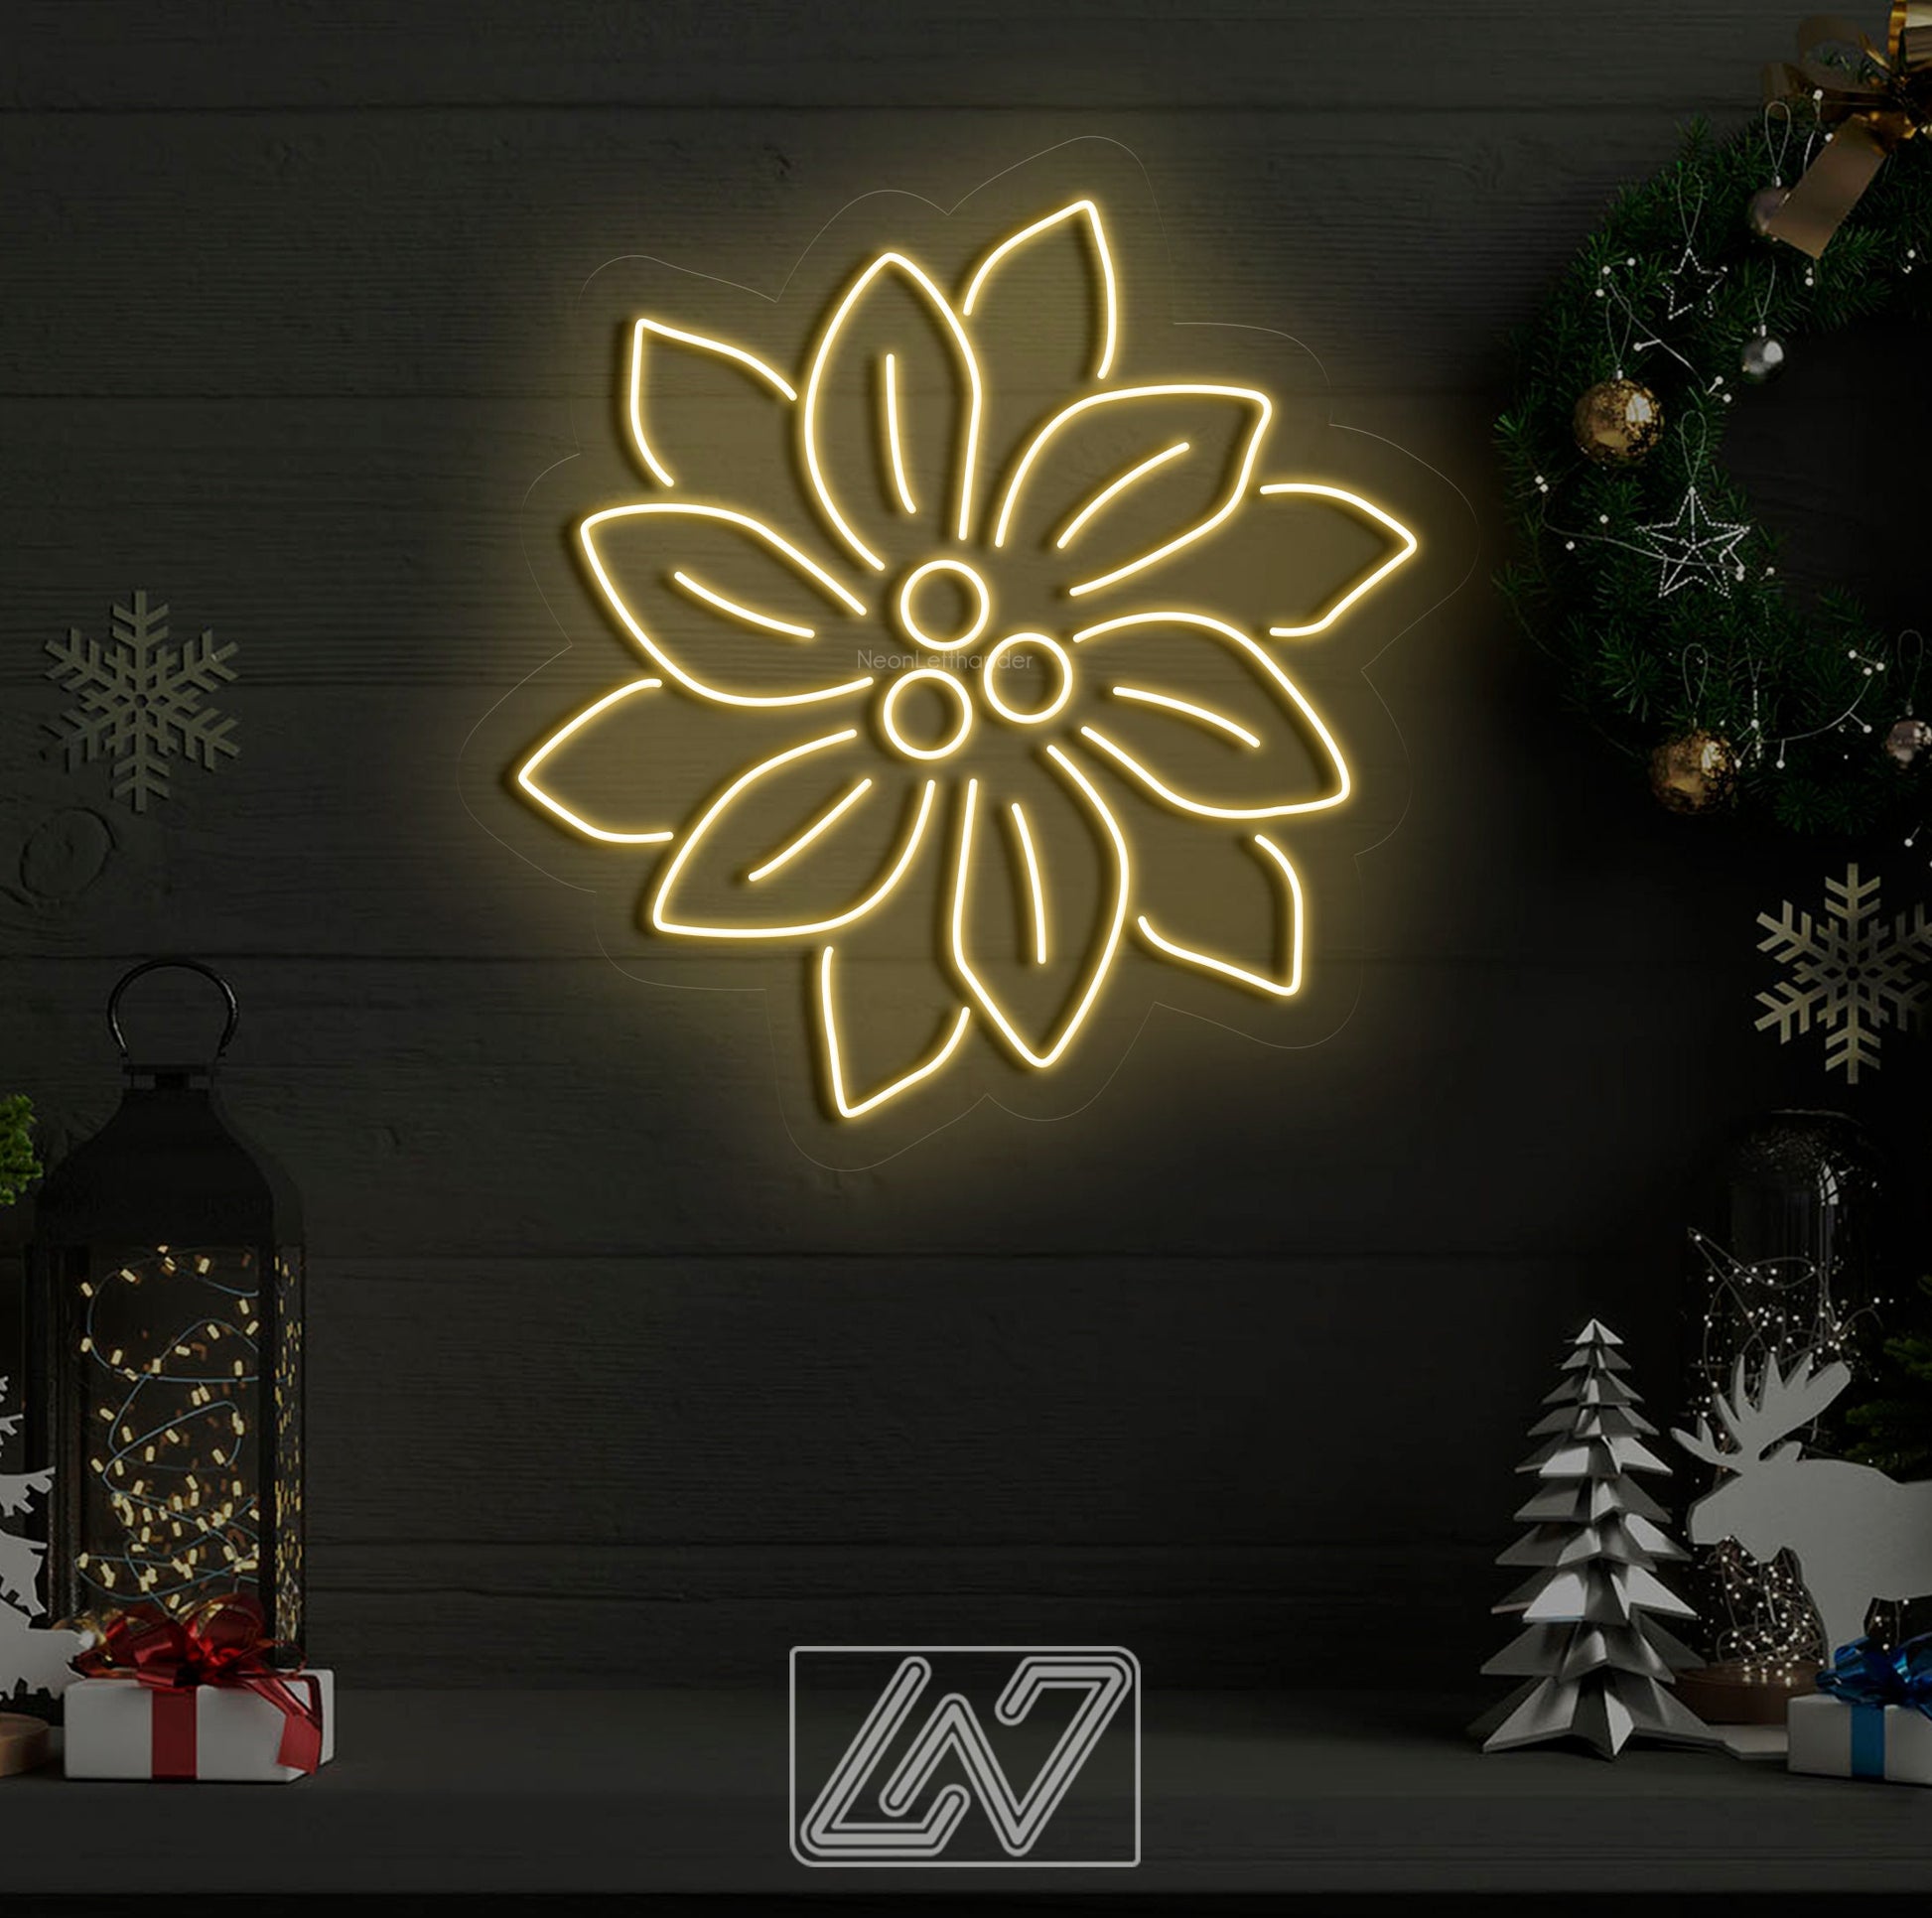 Christmas Mistletoe - LED Neon Sign, Merry Christmas Neon Sign, New Year Neon Sign, Christmas Gift, Christmas Decoration Room